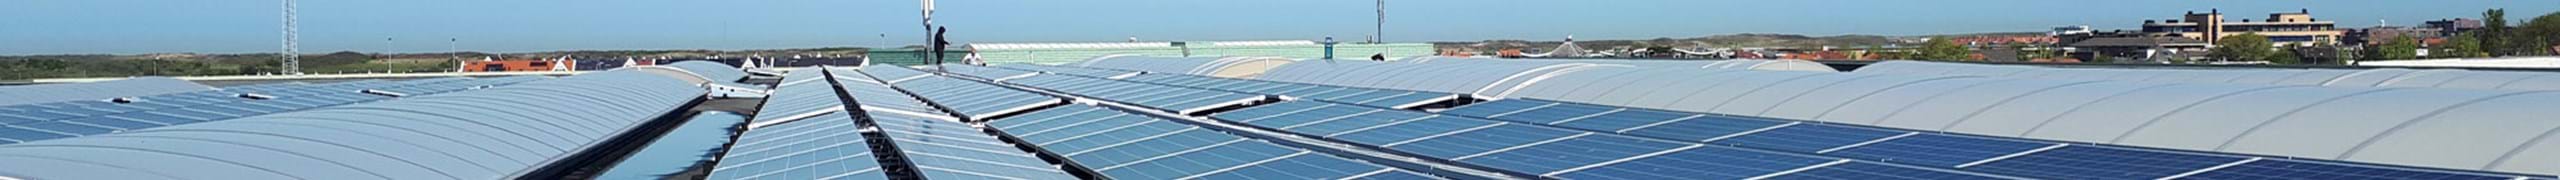 Solar panels roof production hall kubo greenhouses